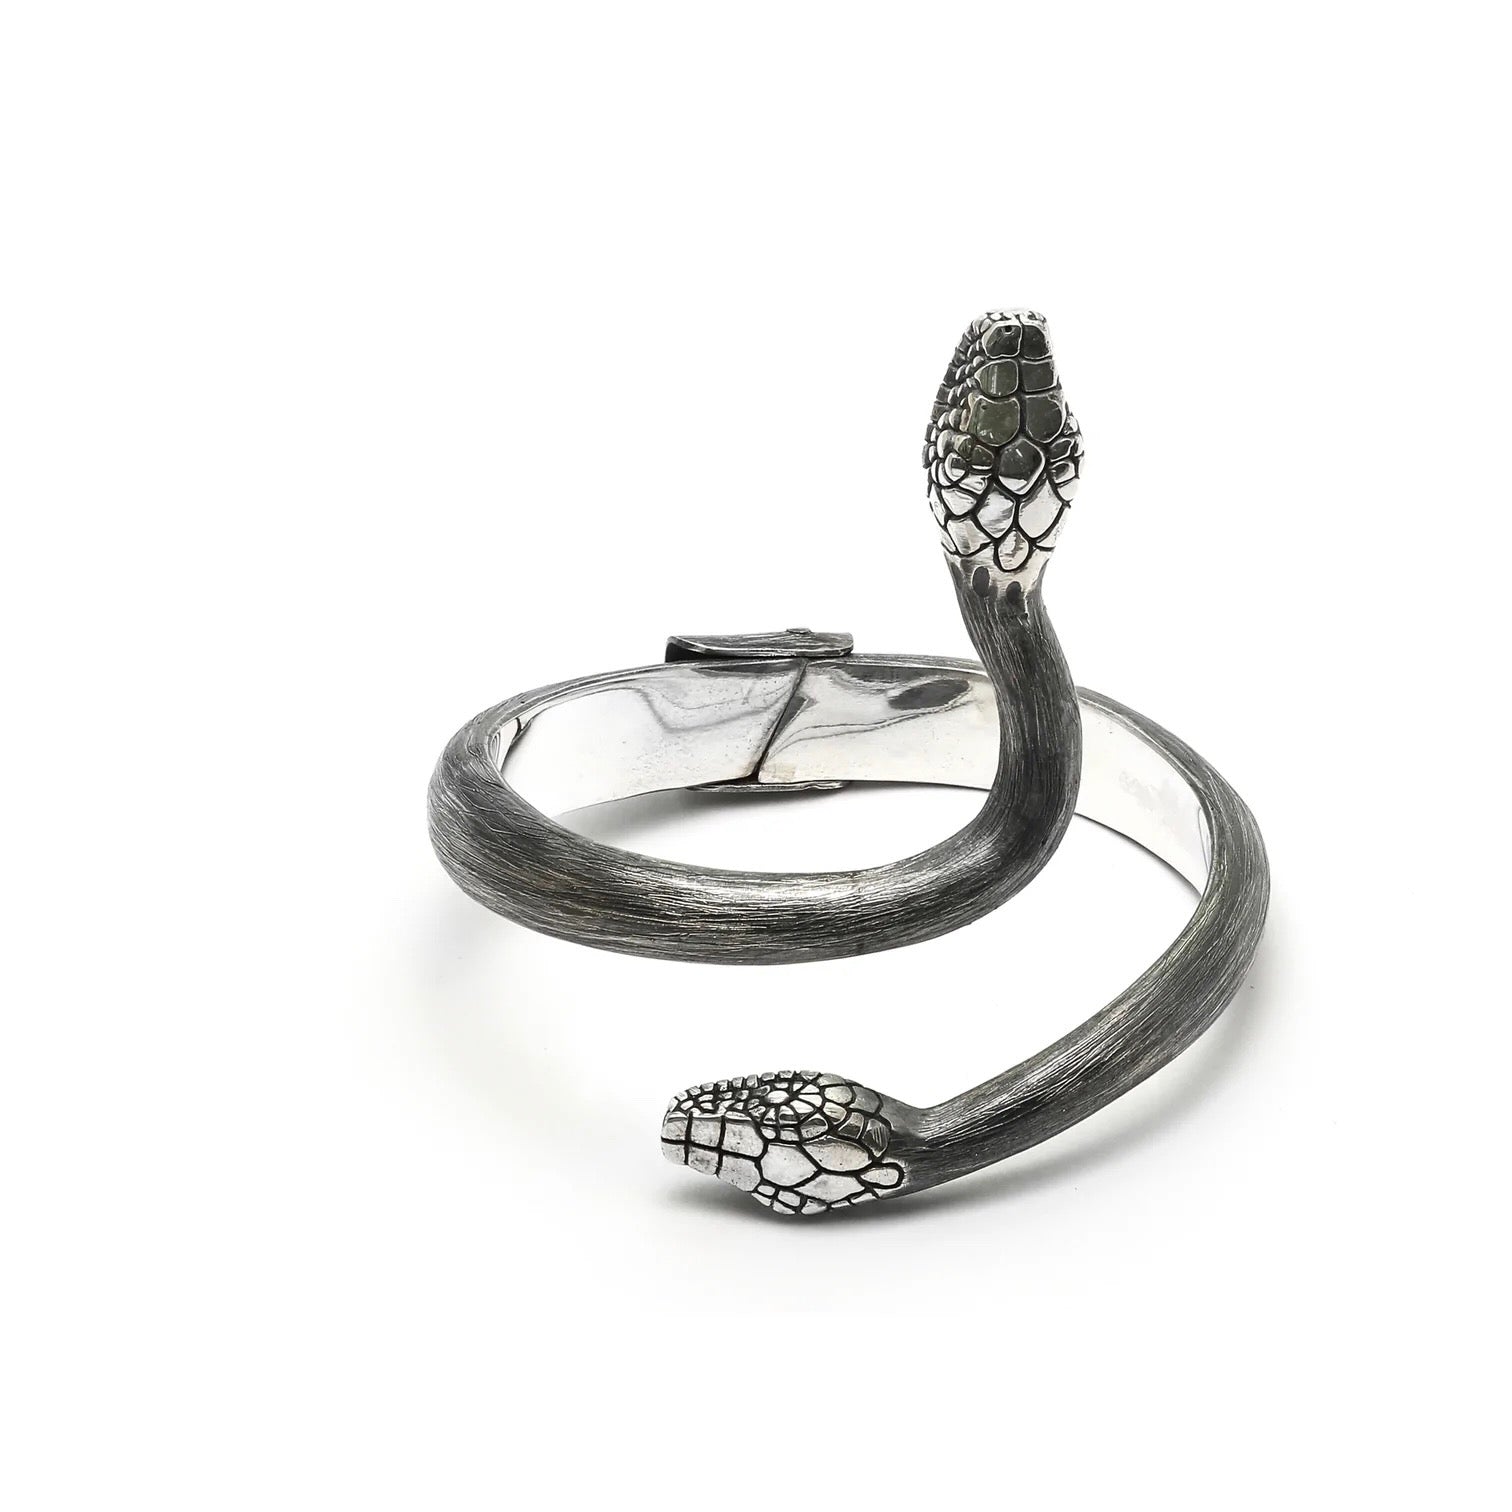 Vintage Silver-toned Snake Cuff Bracelet Spring Open by Sankyo | eBay